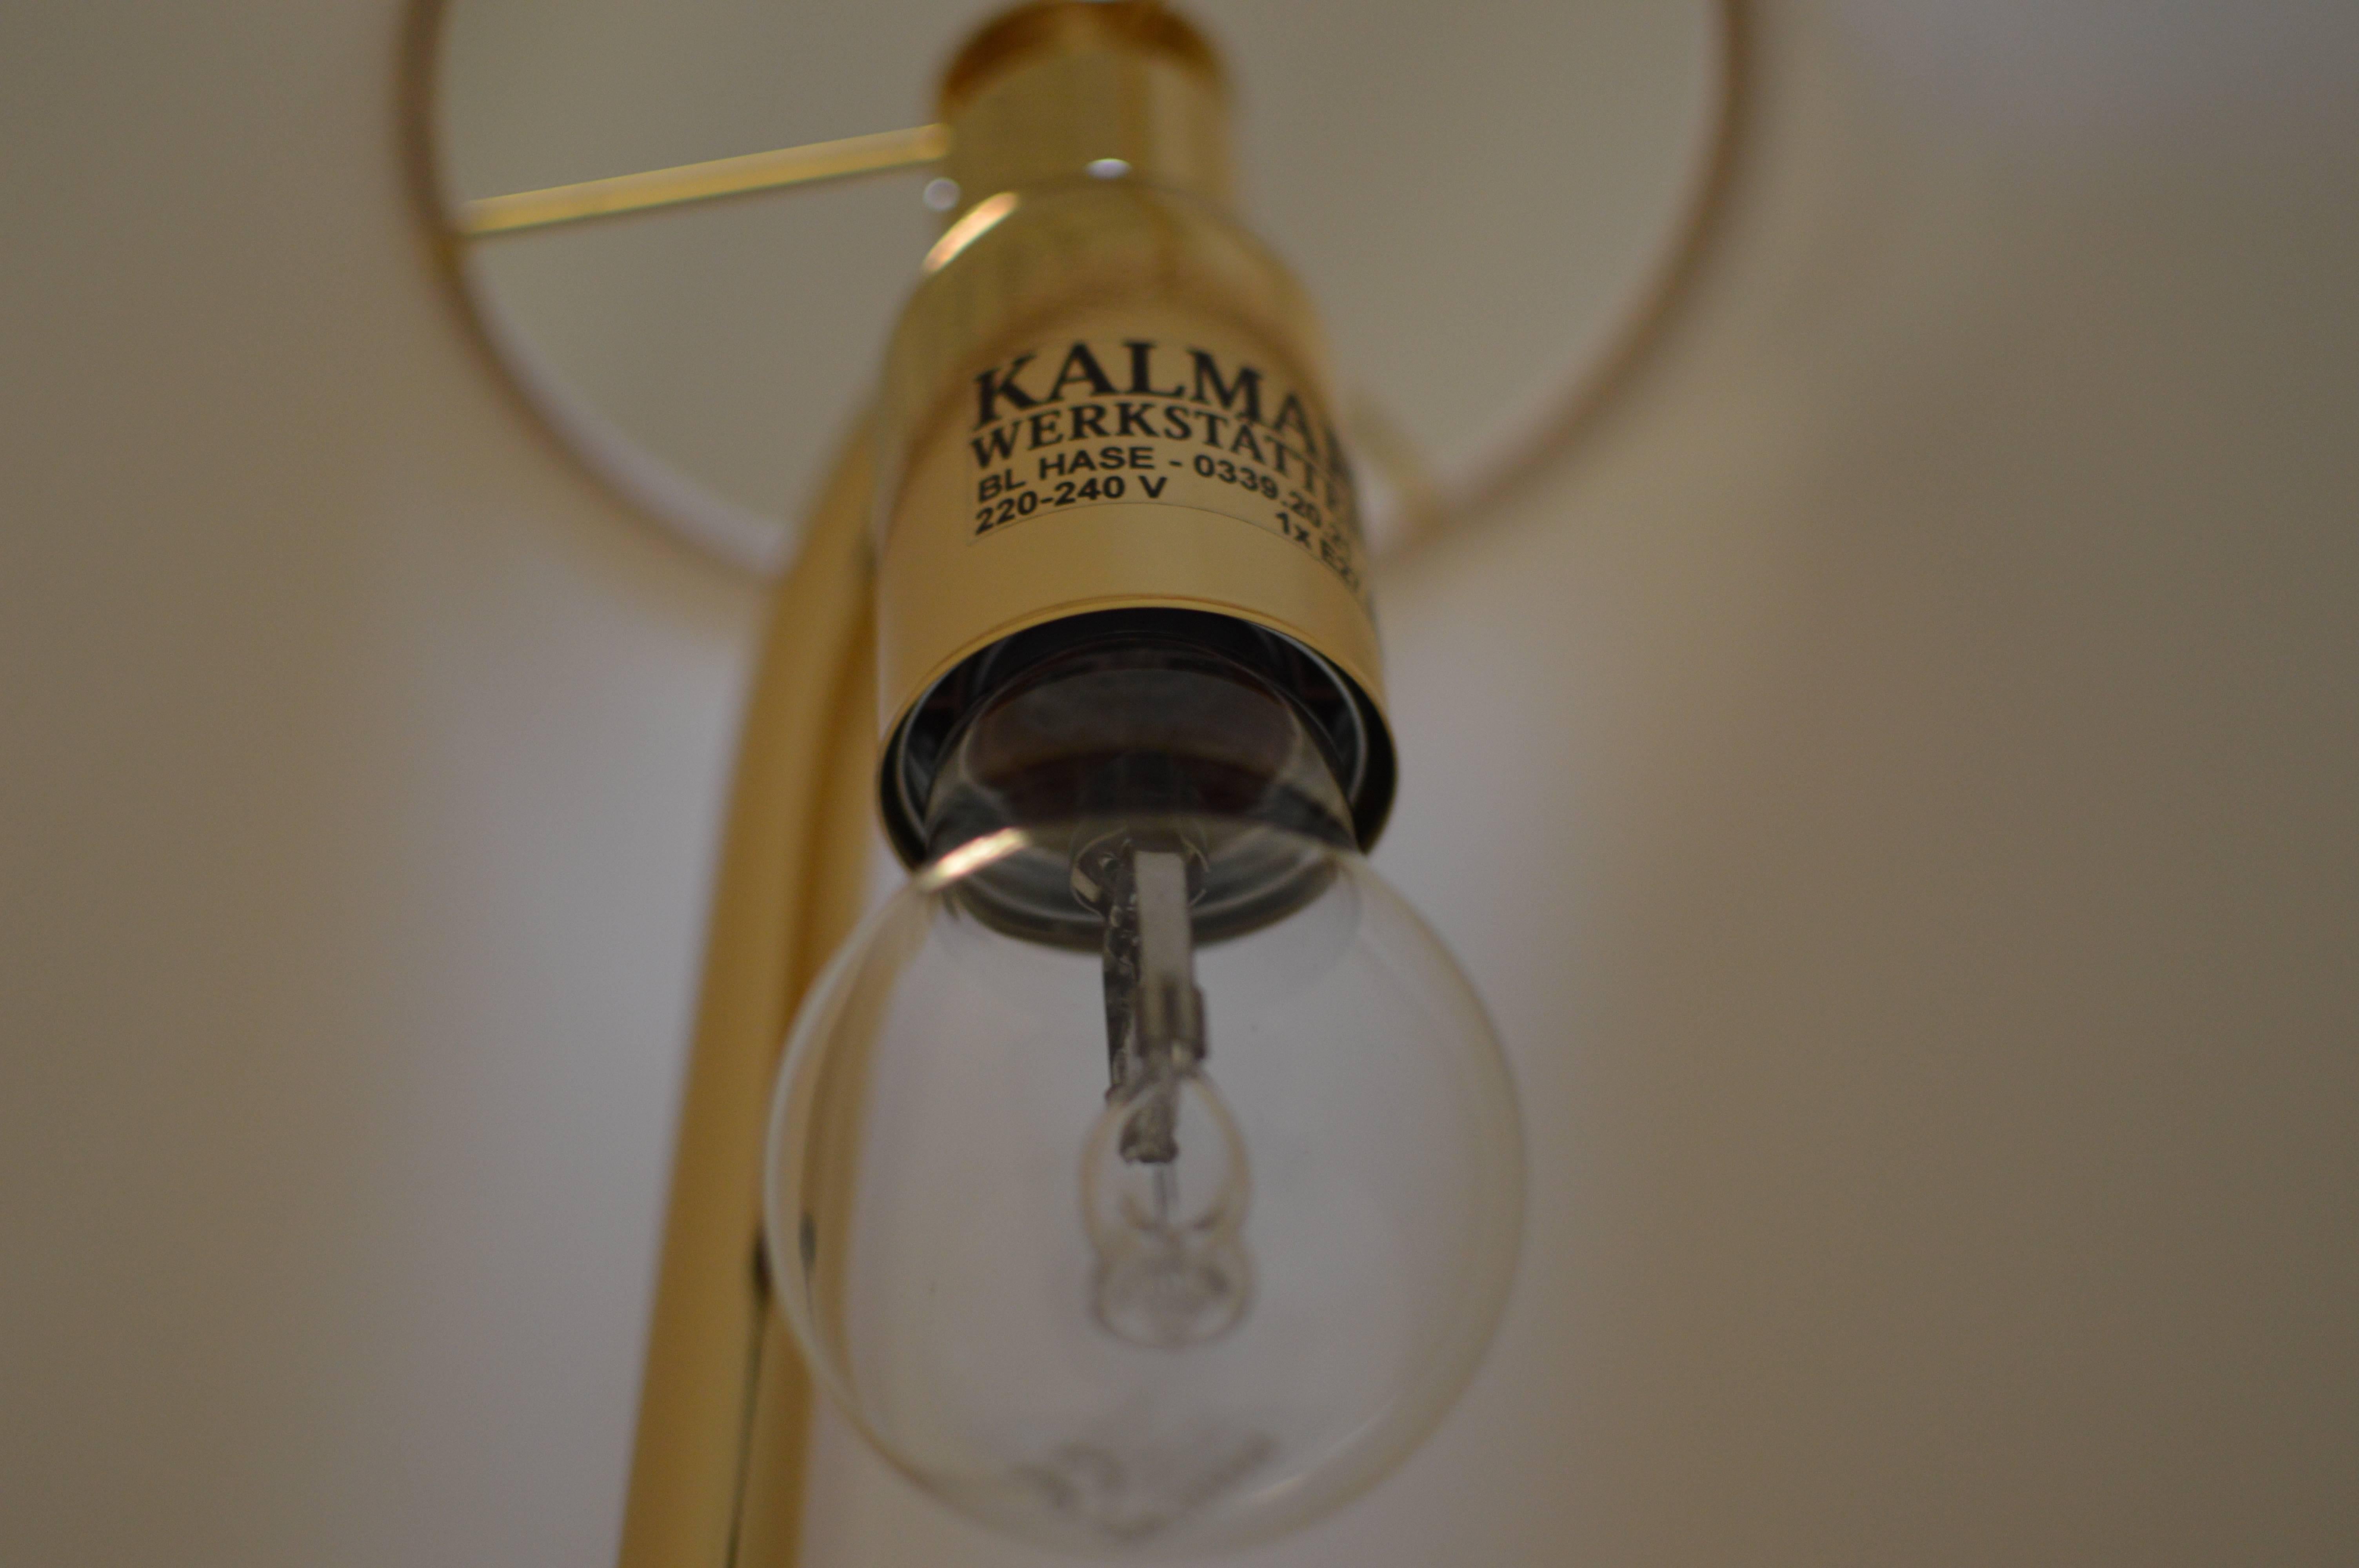 Mid-20th Century Kalmar Werkstätten Brass & Leather 'Hase BL' Floor Lamp - NEW SHIPS FROM STOCK